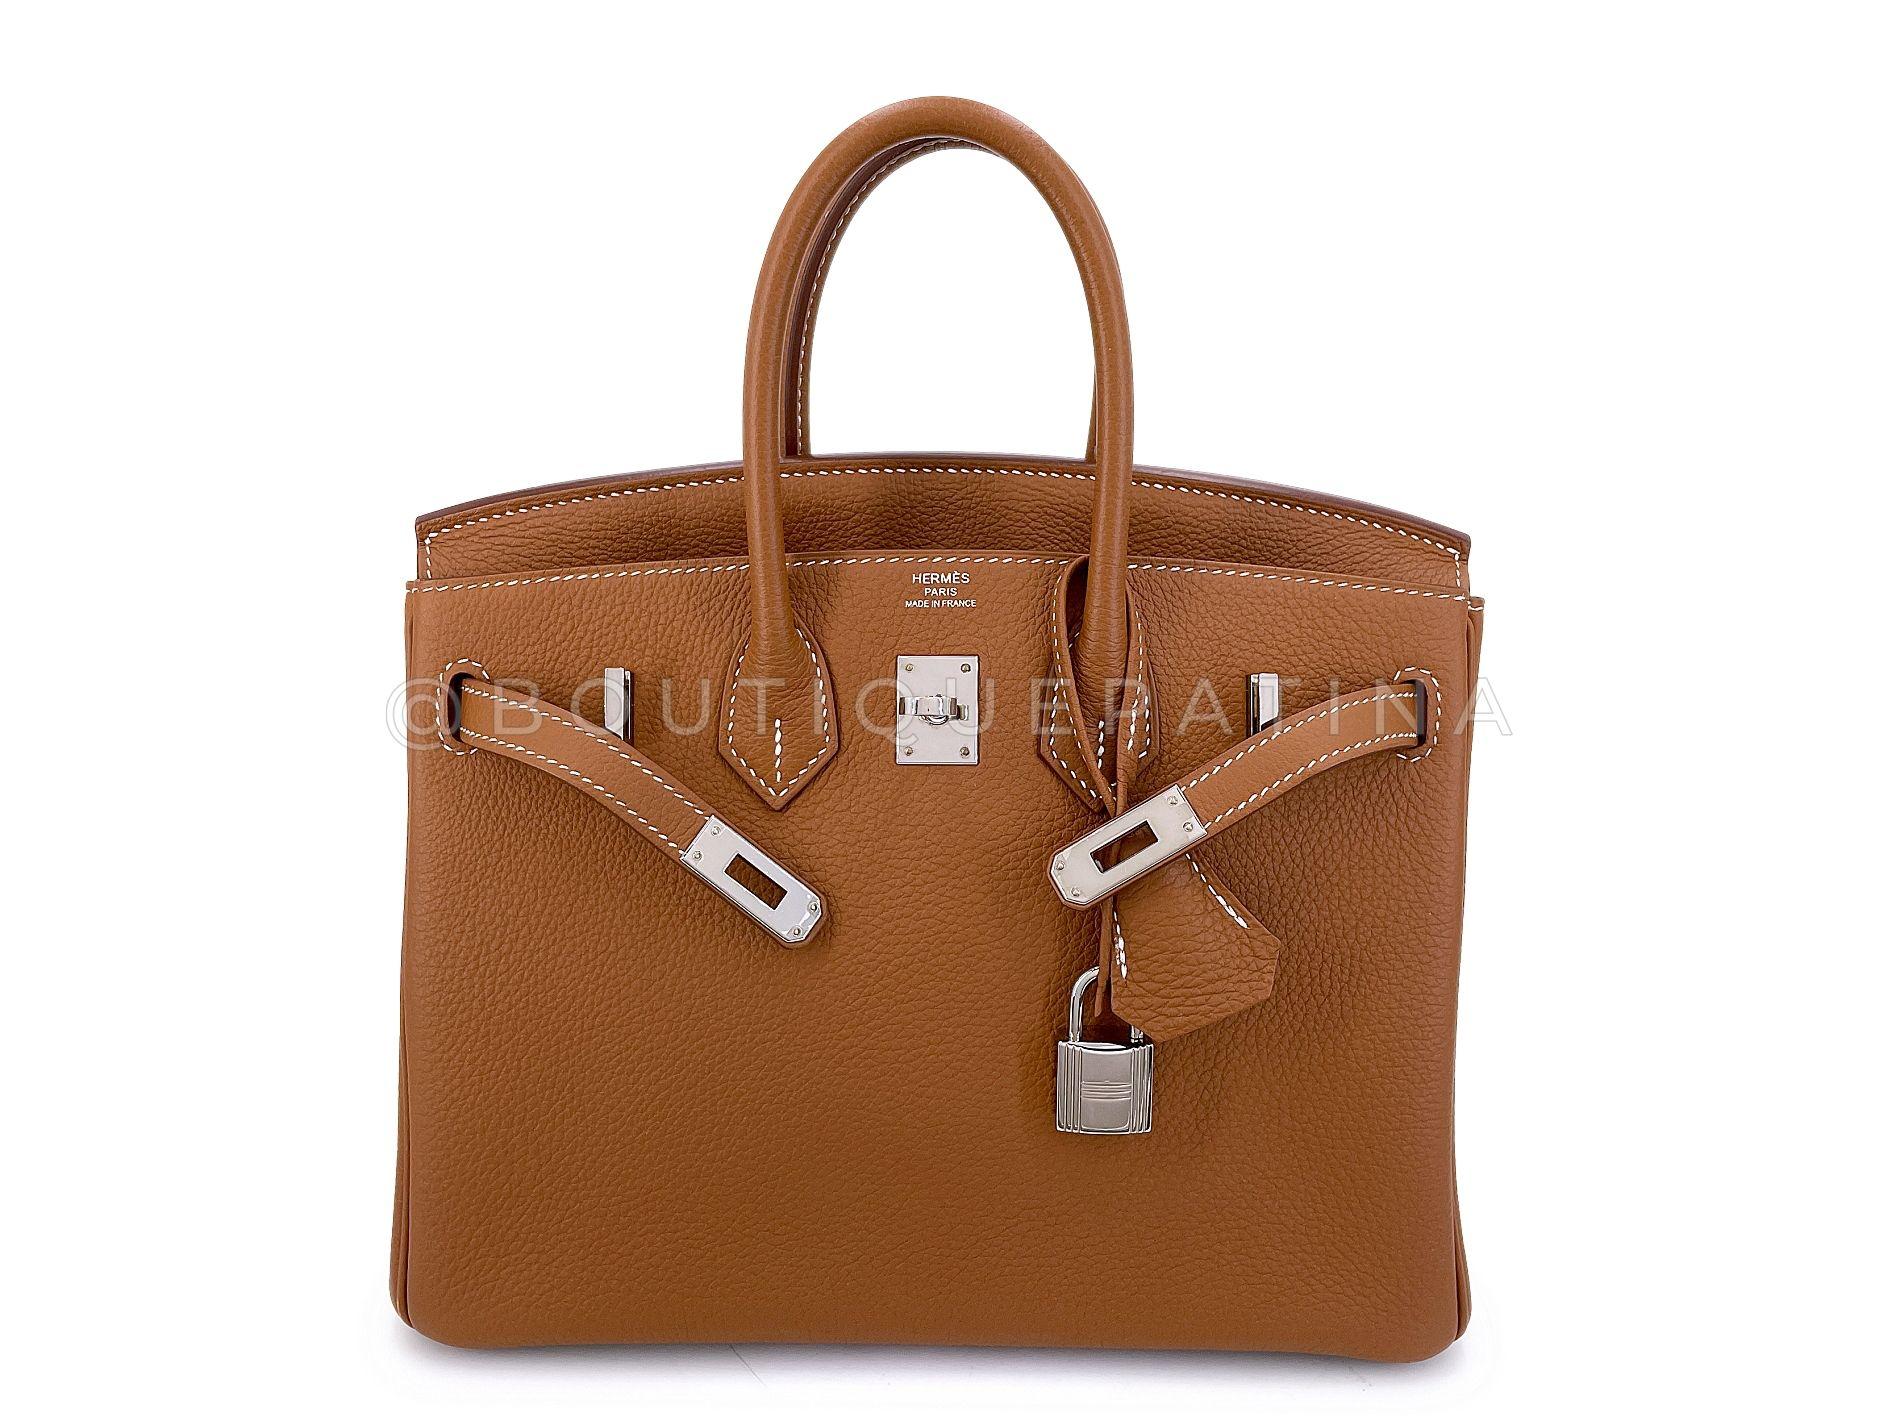 Hermès Gold Togo Birkin 25cm Tote Bag PHW 67913 For Sale 9